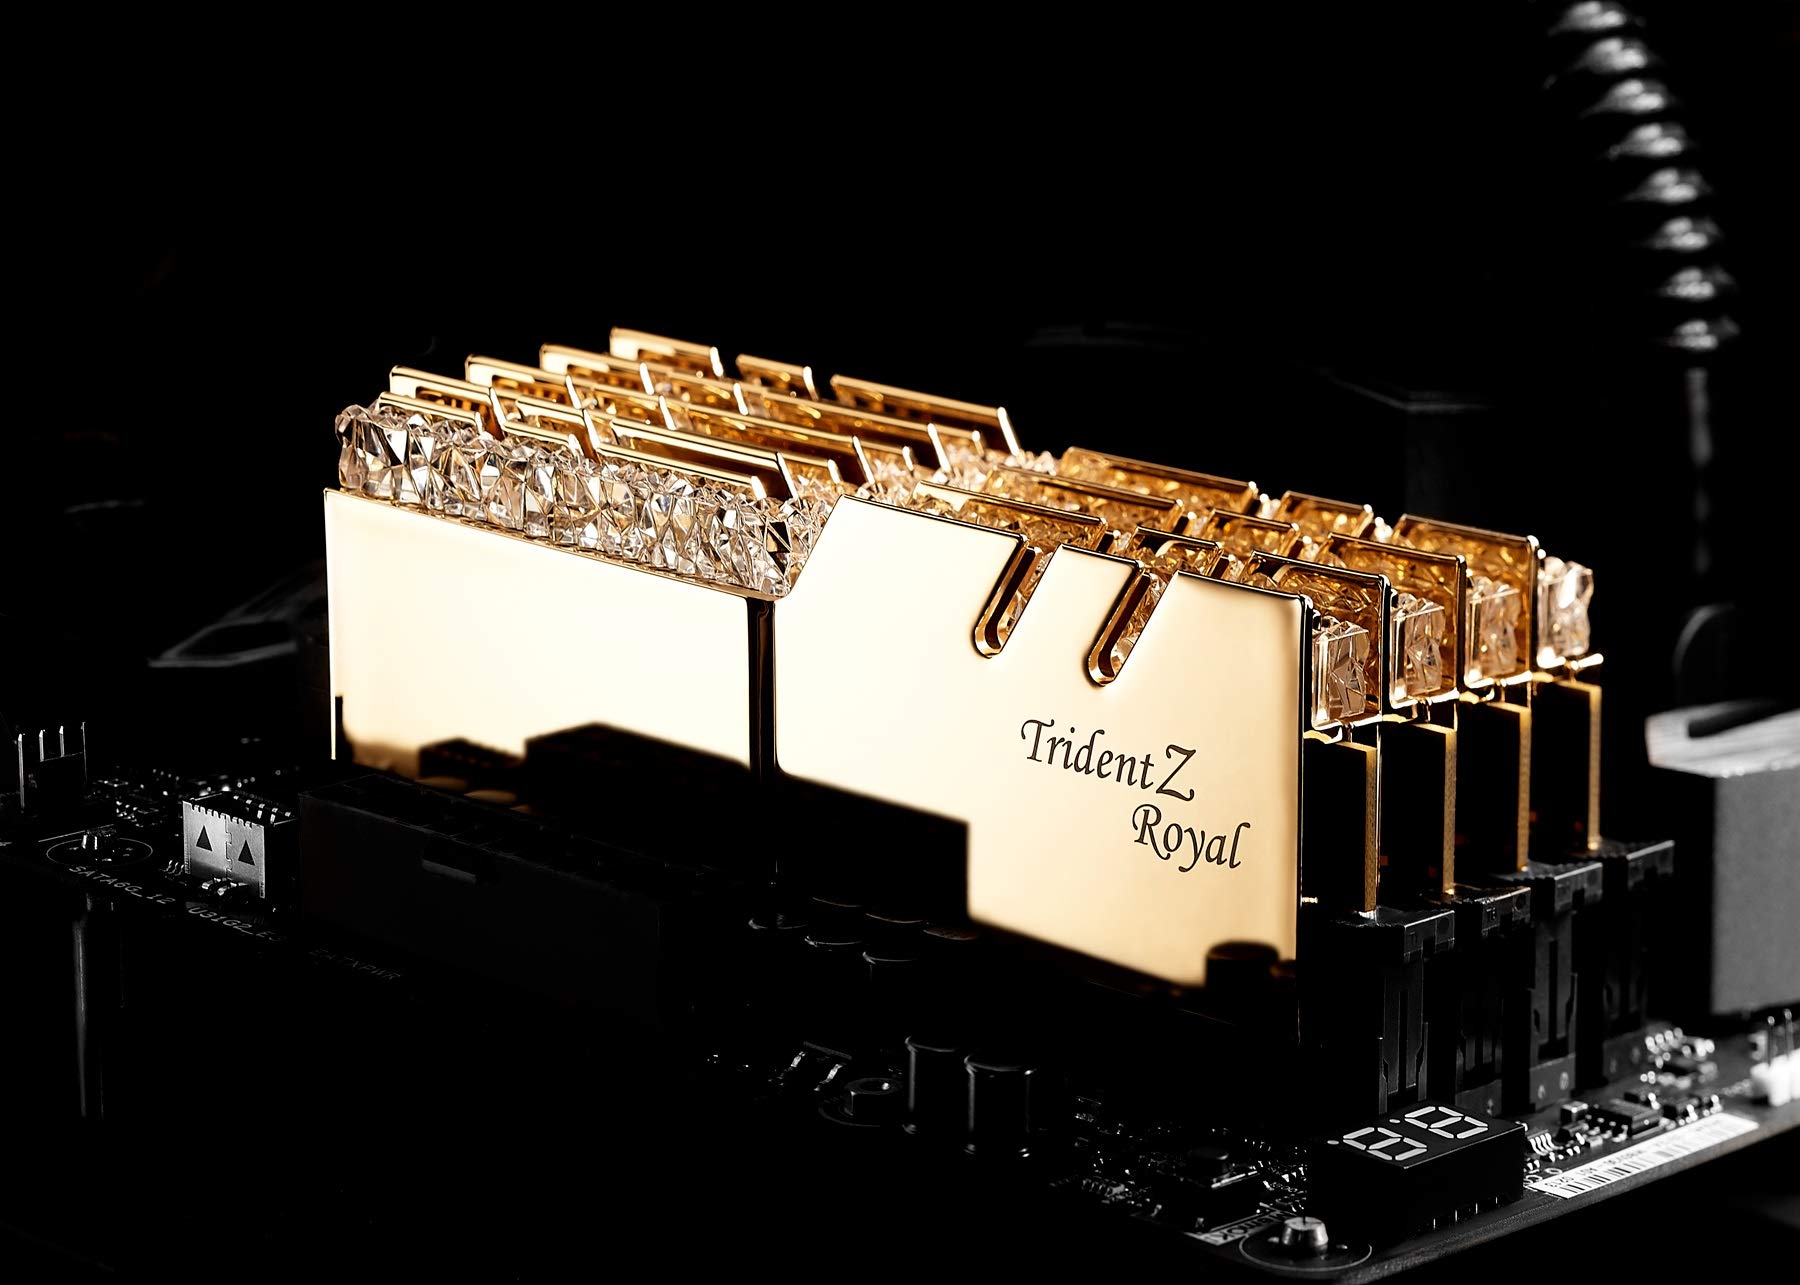 G.SKILL Trident Z Royal Series (Intel XMP) DDR4 RAM 16GB (2x8GB) 3200MT/s CL16-18-18-38 1.35V Desktop Computer Memory UDIMM - Gold (F4-3200C16D-16GTRG)